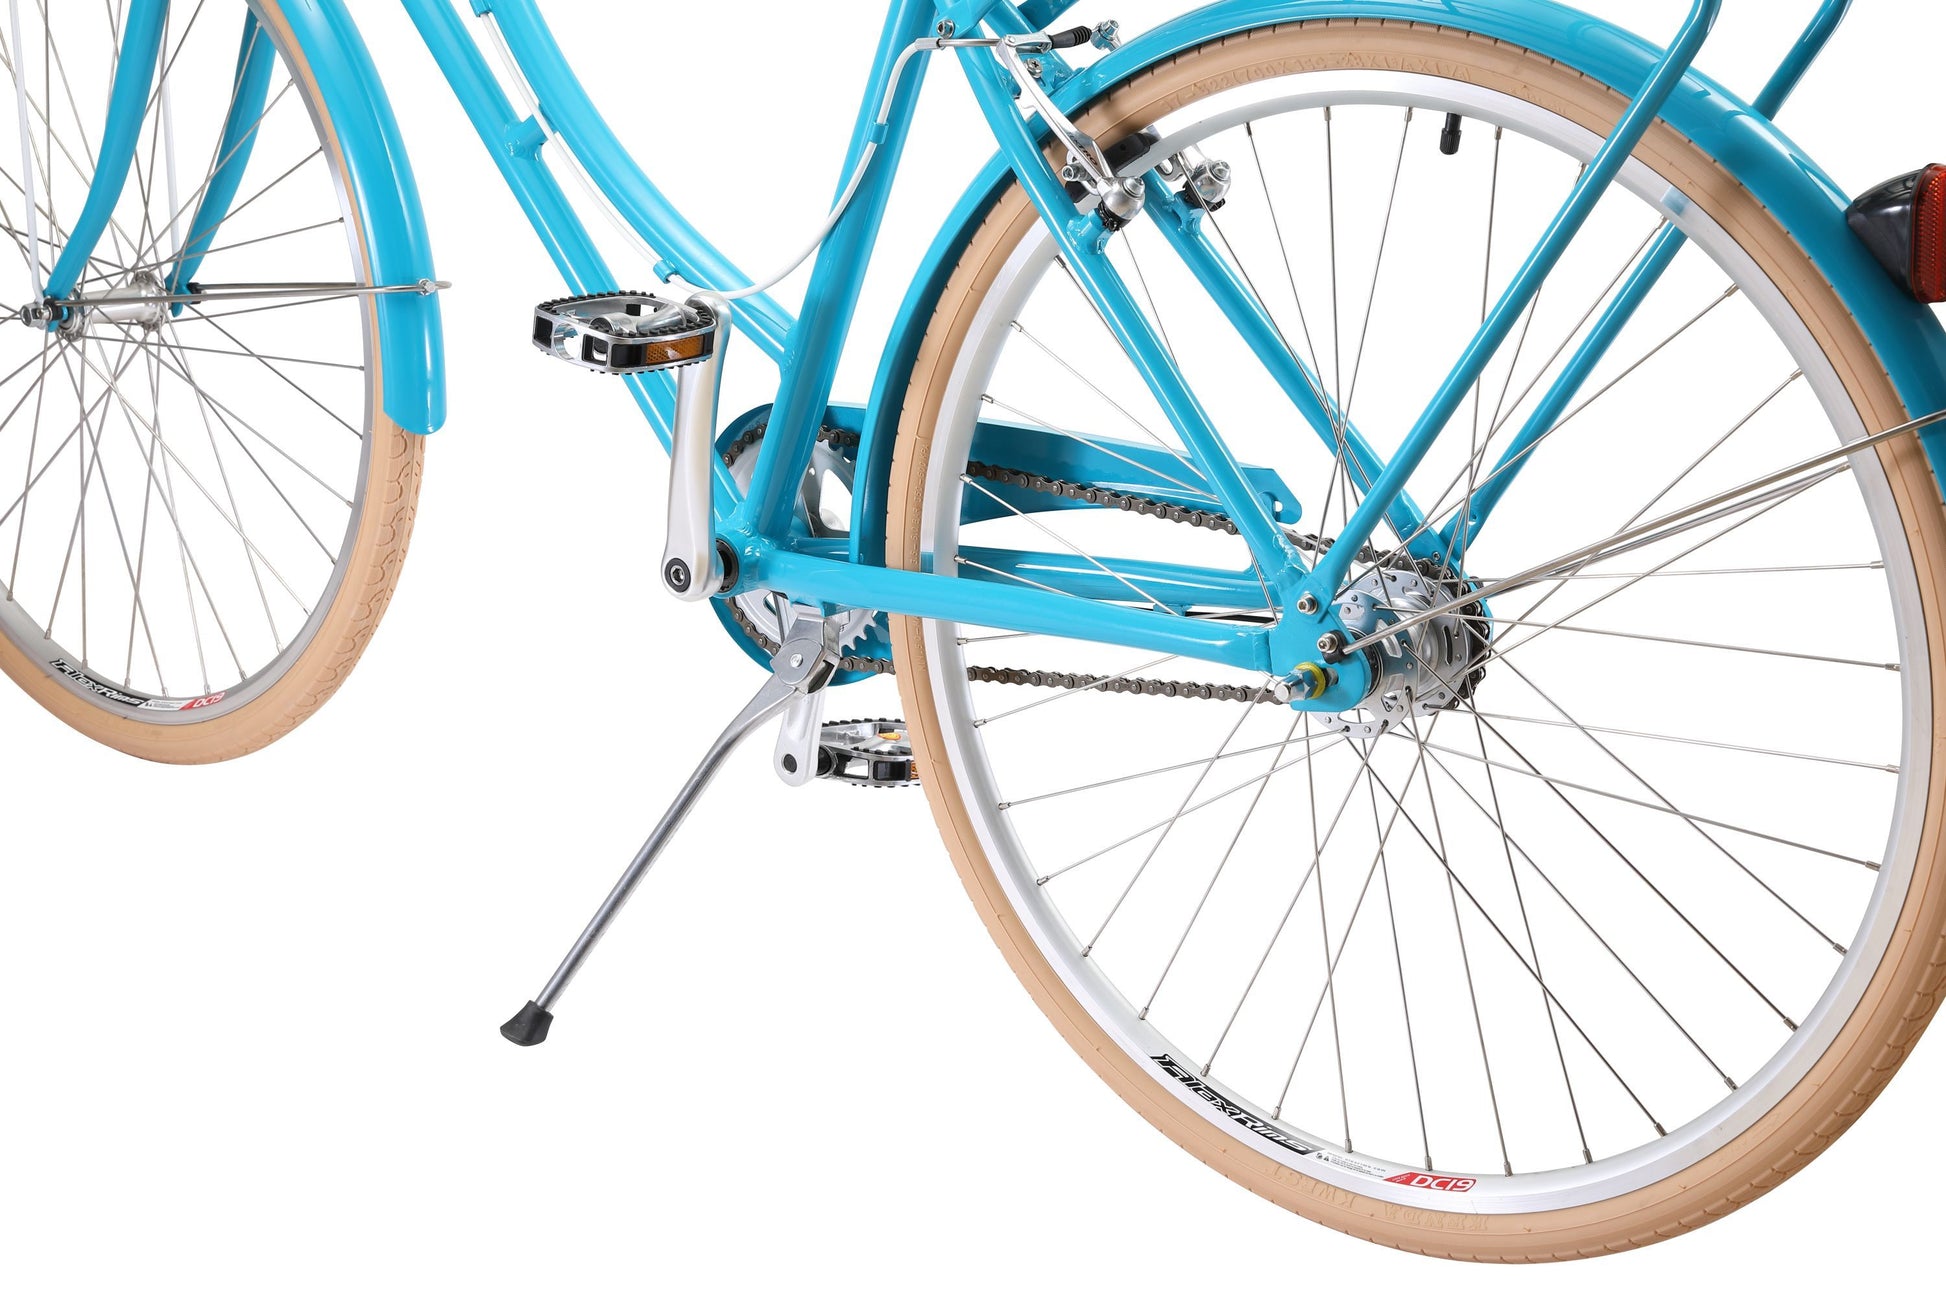 Ladies Deluxe Vintage Bike in Aqua featuring alloy kickstand from Reid Cycles Australia